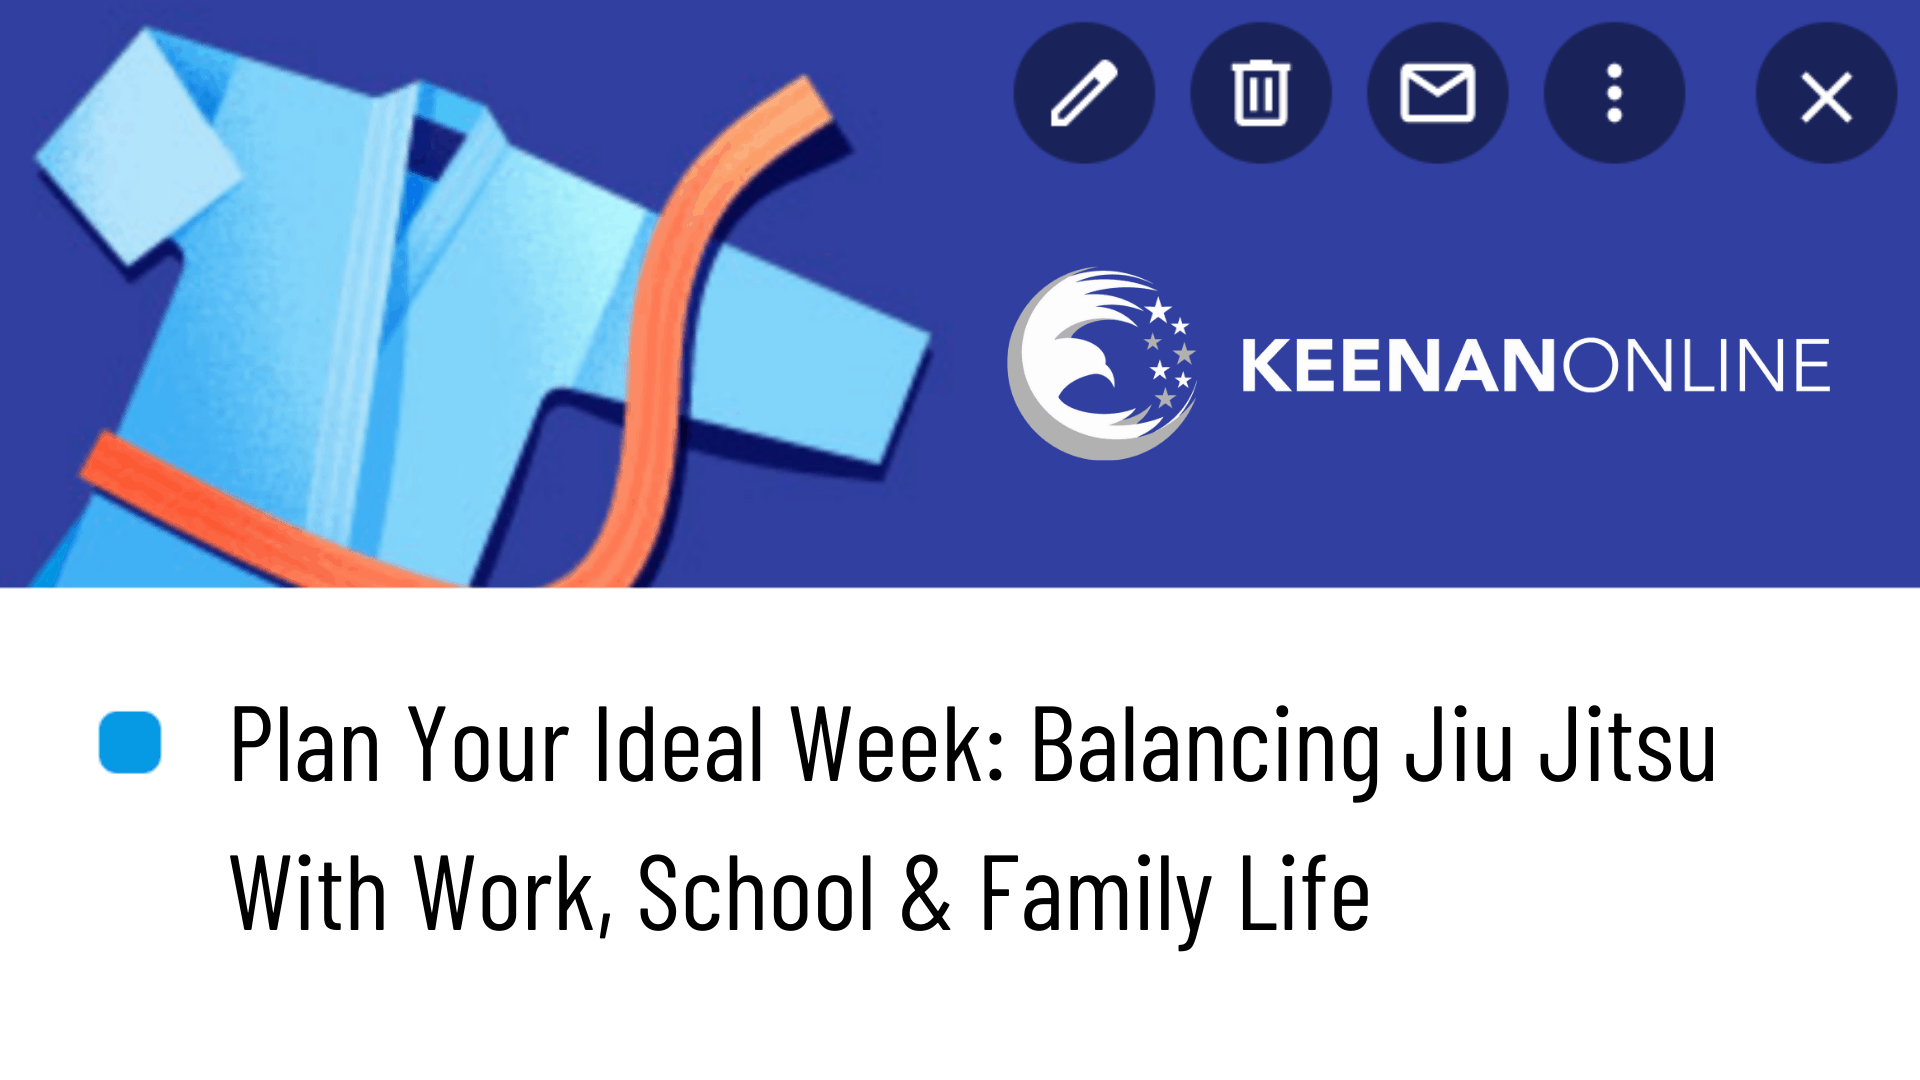 plan-your-ideal-week-balancing-jiu-jitsu-with-work-school-and=family-life